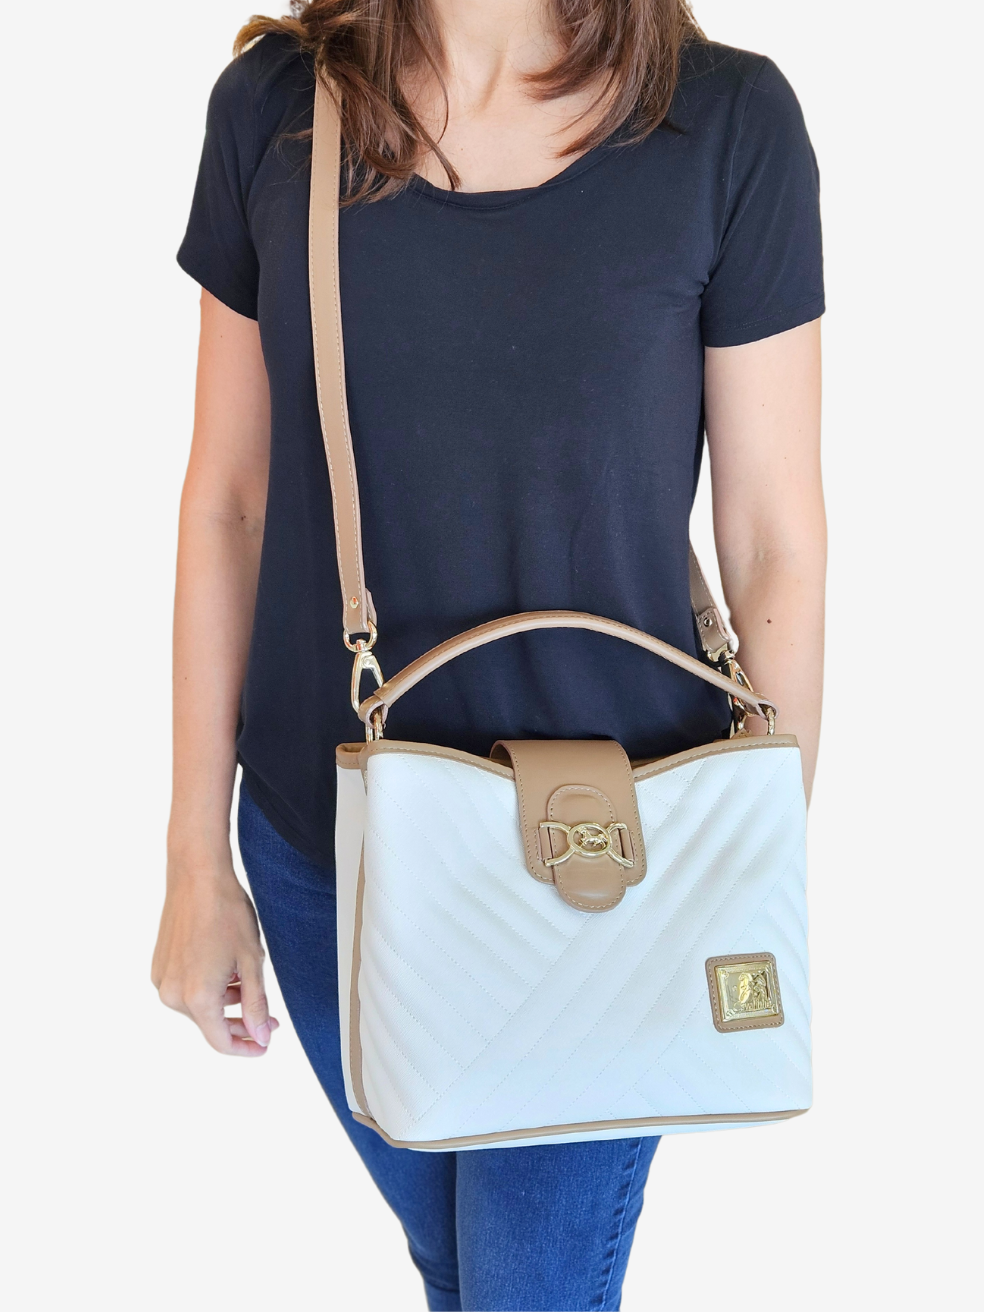 Cavalinho Charming Handbag SKU 18470429.38 #color_Navy / Tan / Beige, white / sand